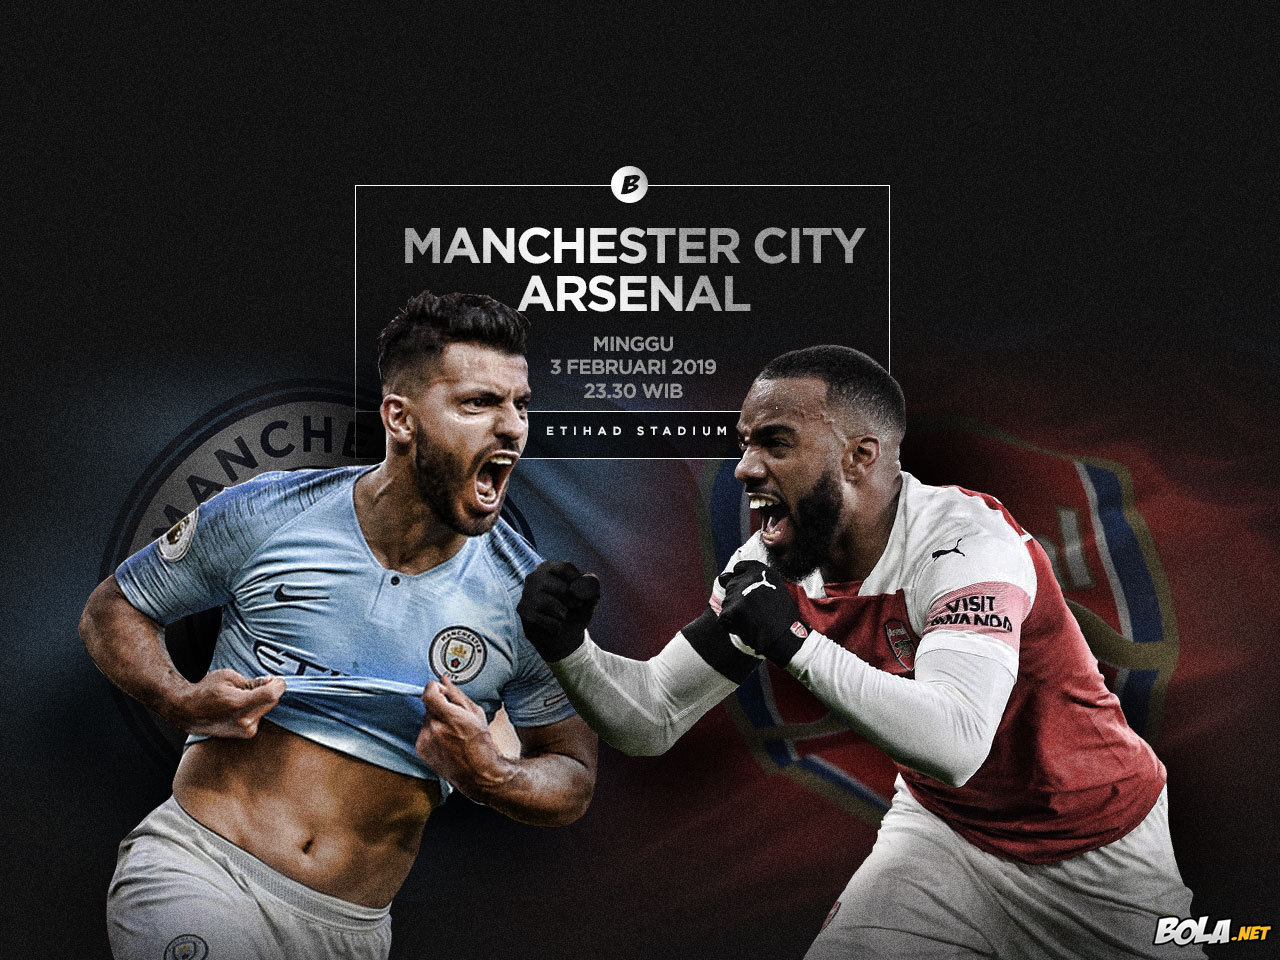 Deskripsi : Wallpaper Manchester City Vs Arsenal, size: 1280x960